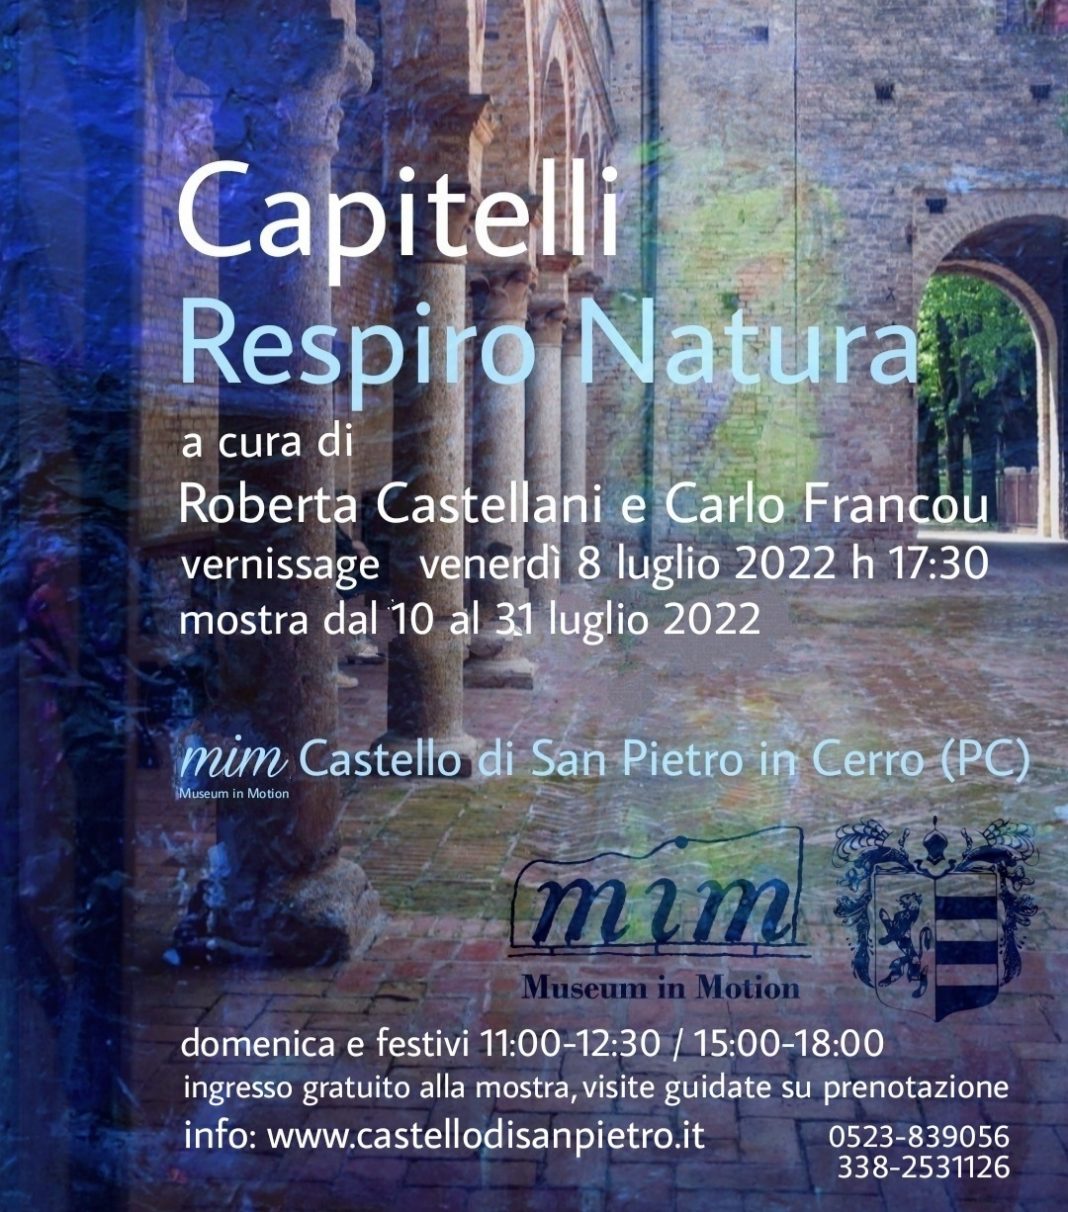 Paolo Capitelli – Respiro naturahttps://www.exibart.com/repository/media/formidable/11/img/1f5/IMG_20220701_115328-1068x1212.jpg